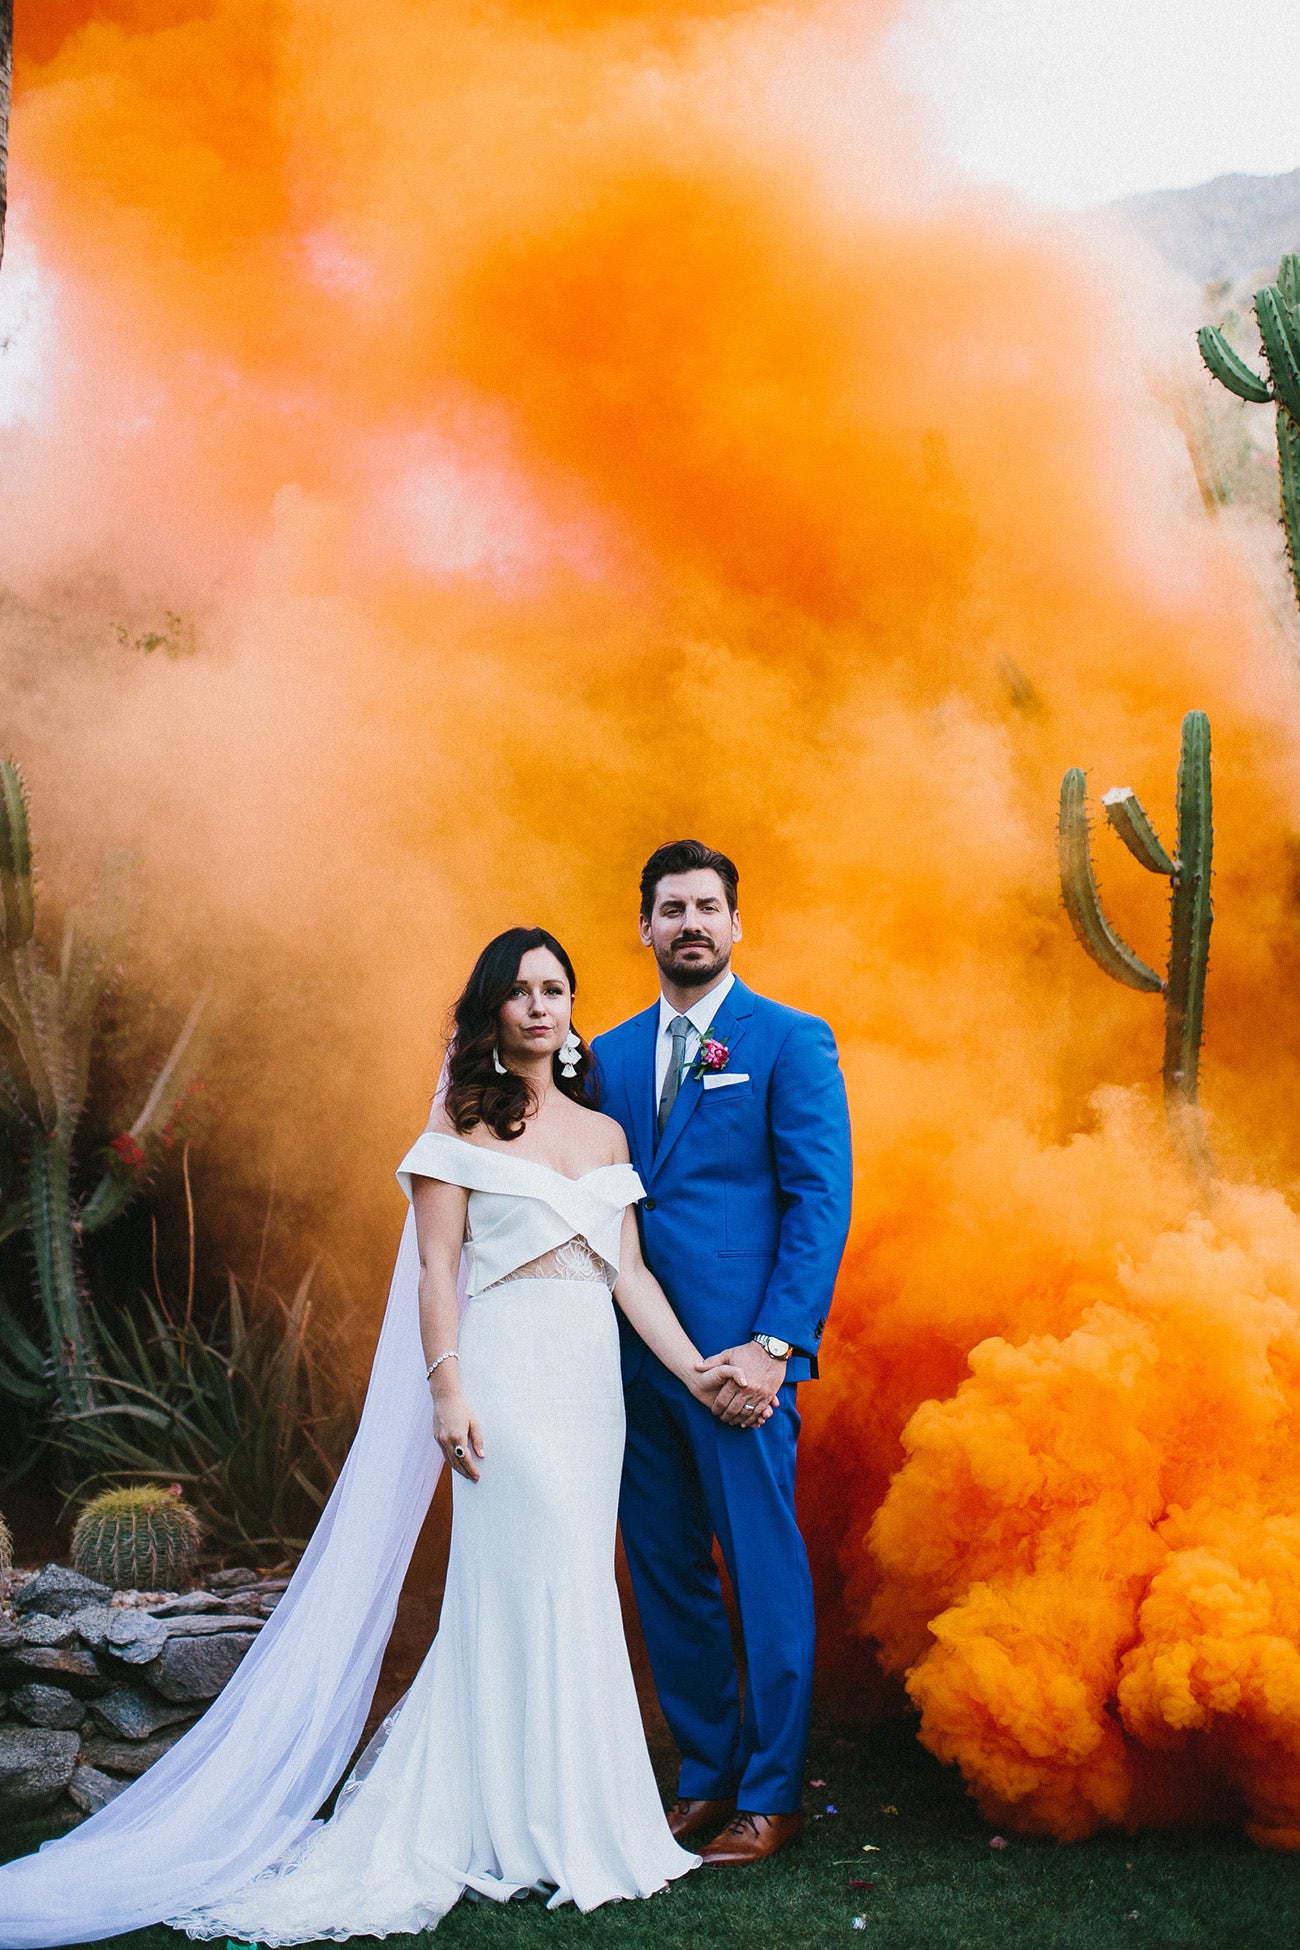 Wedding Color Smoke Bombs in Orange